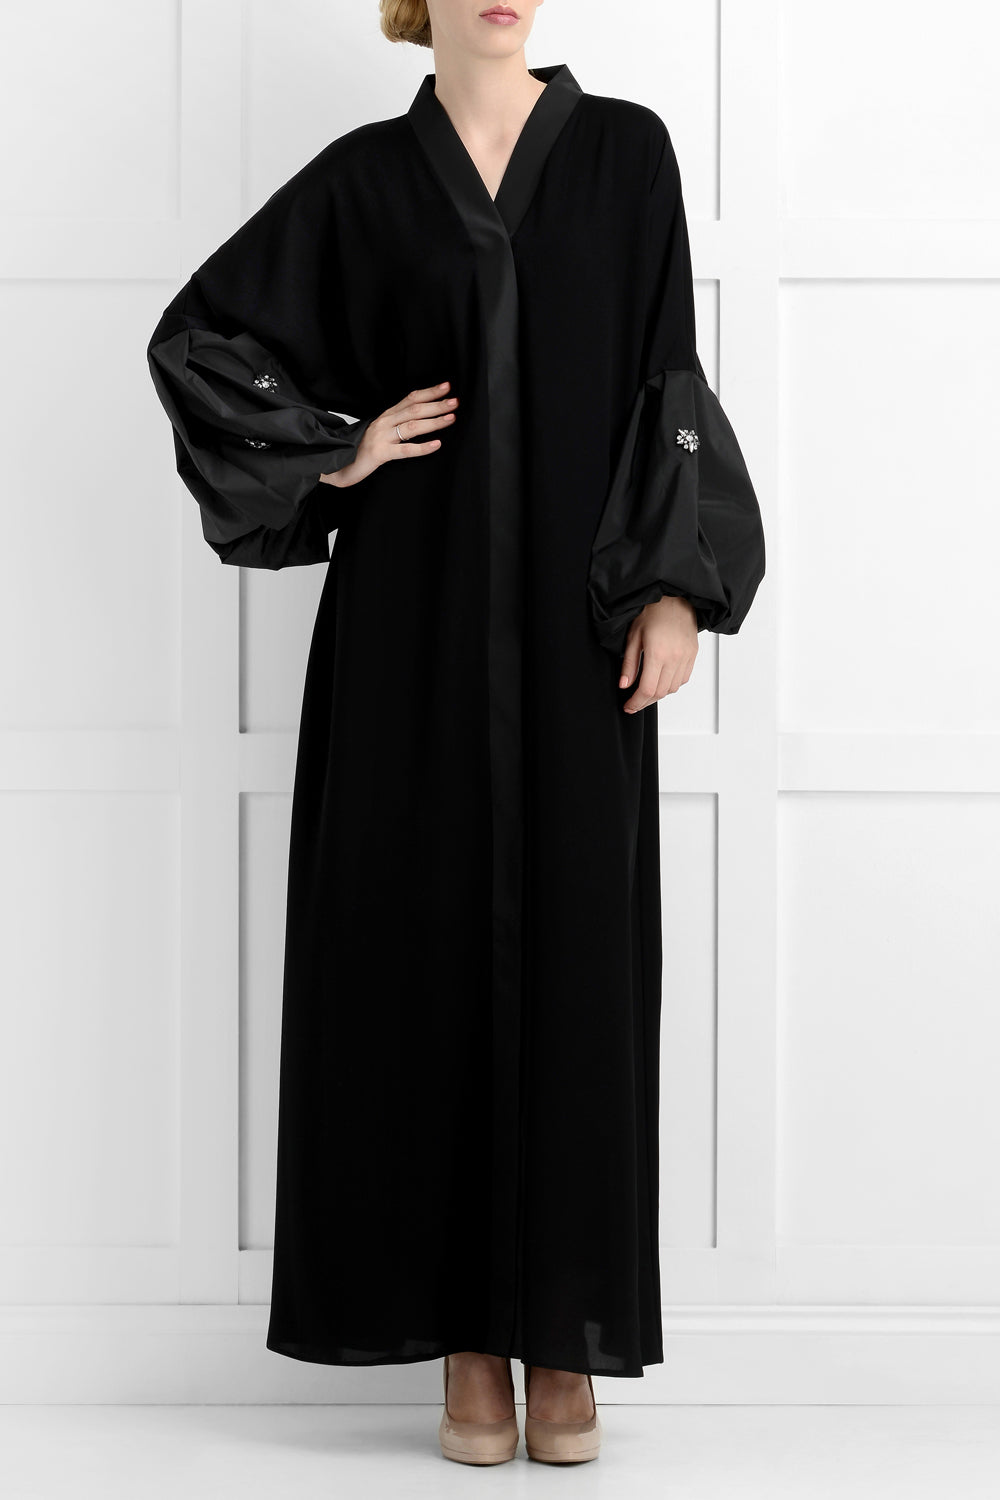 Dariya Luxury Black Abaya